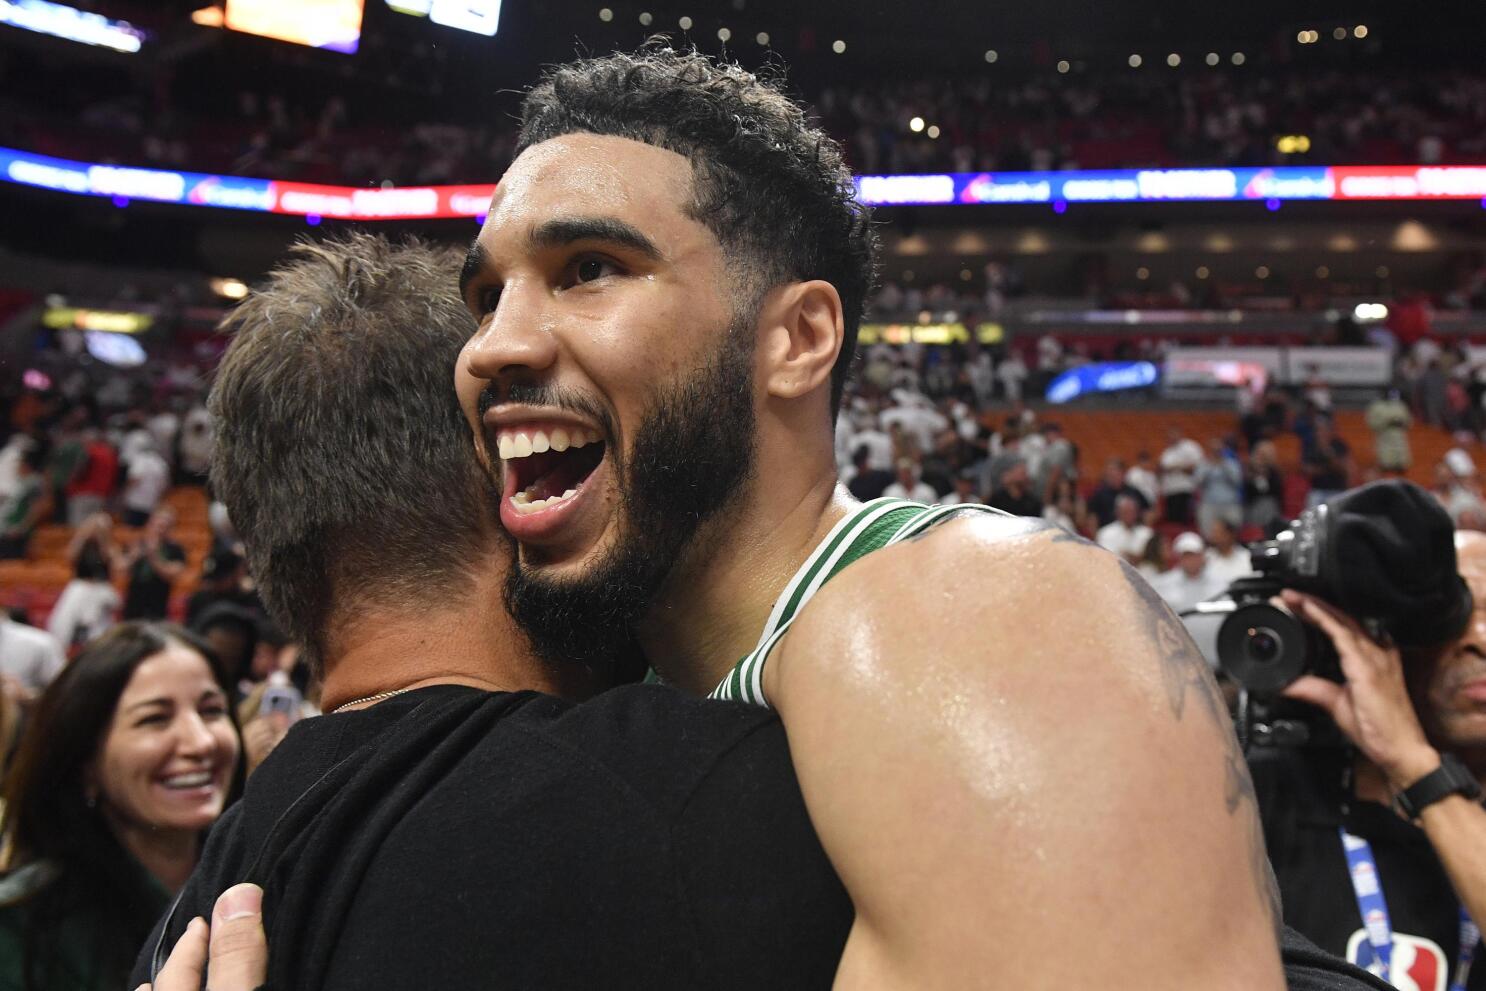 History denied: Celtics lose Game 7 to Heat